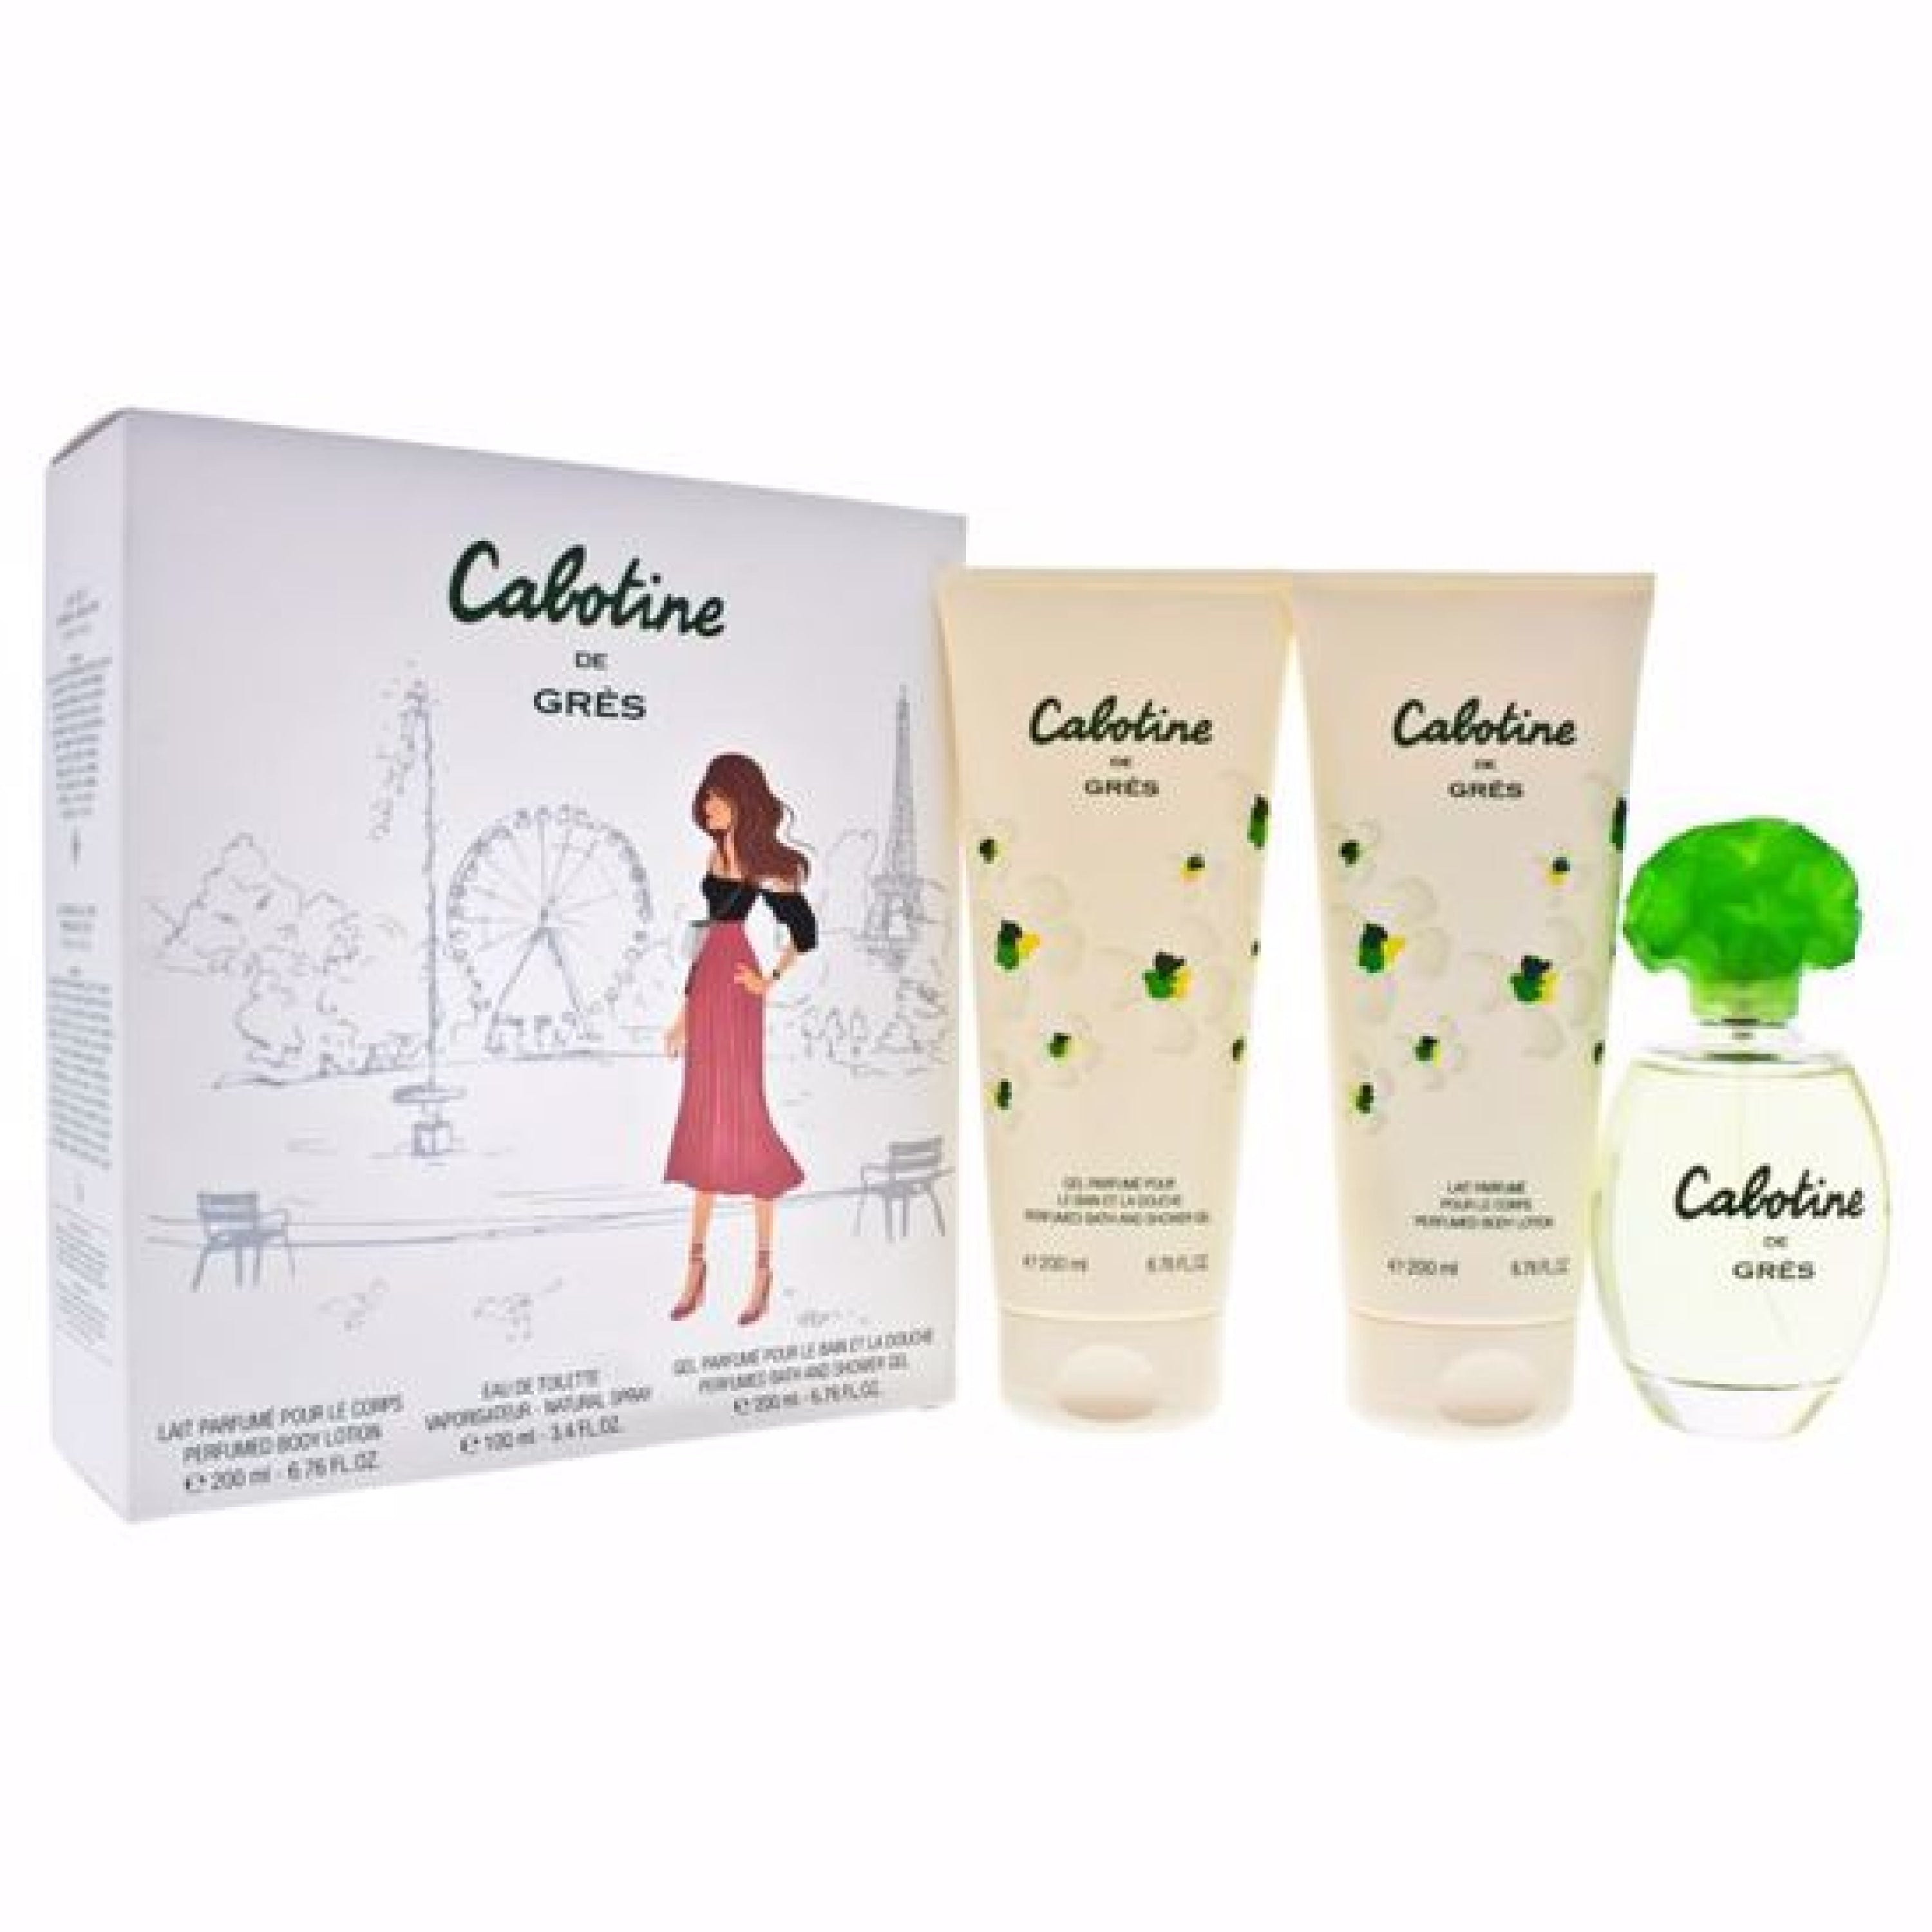 Cabotine 3Pcs Gift Set 100Ml Edt Spray + 200Ml Body Lotion Shower Gel (Women)